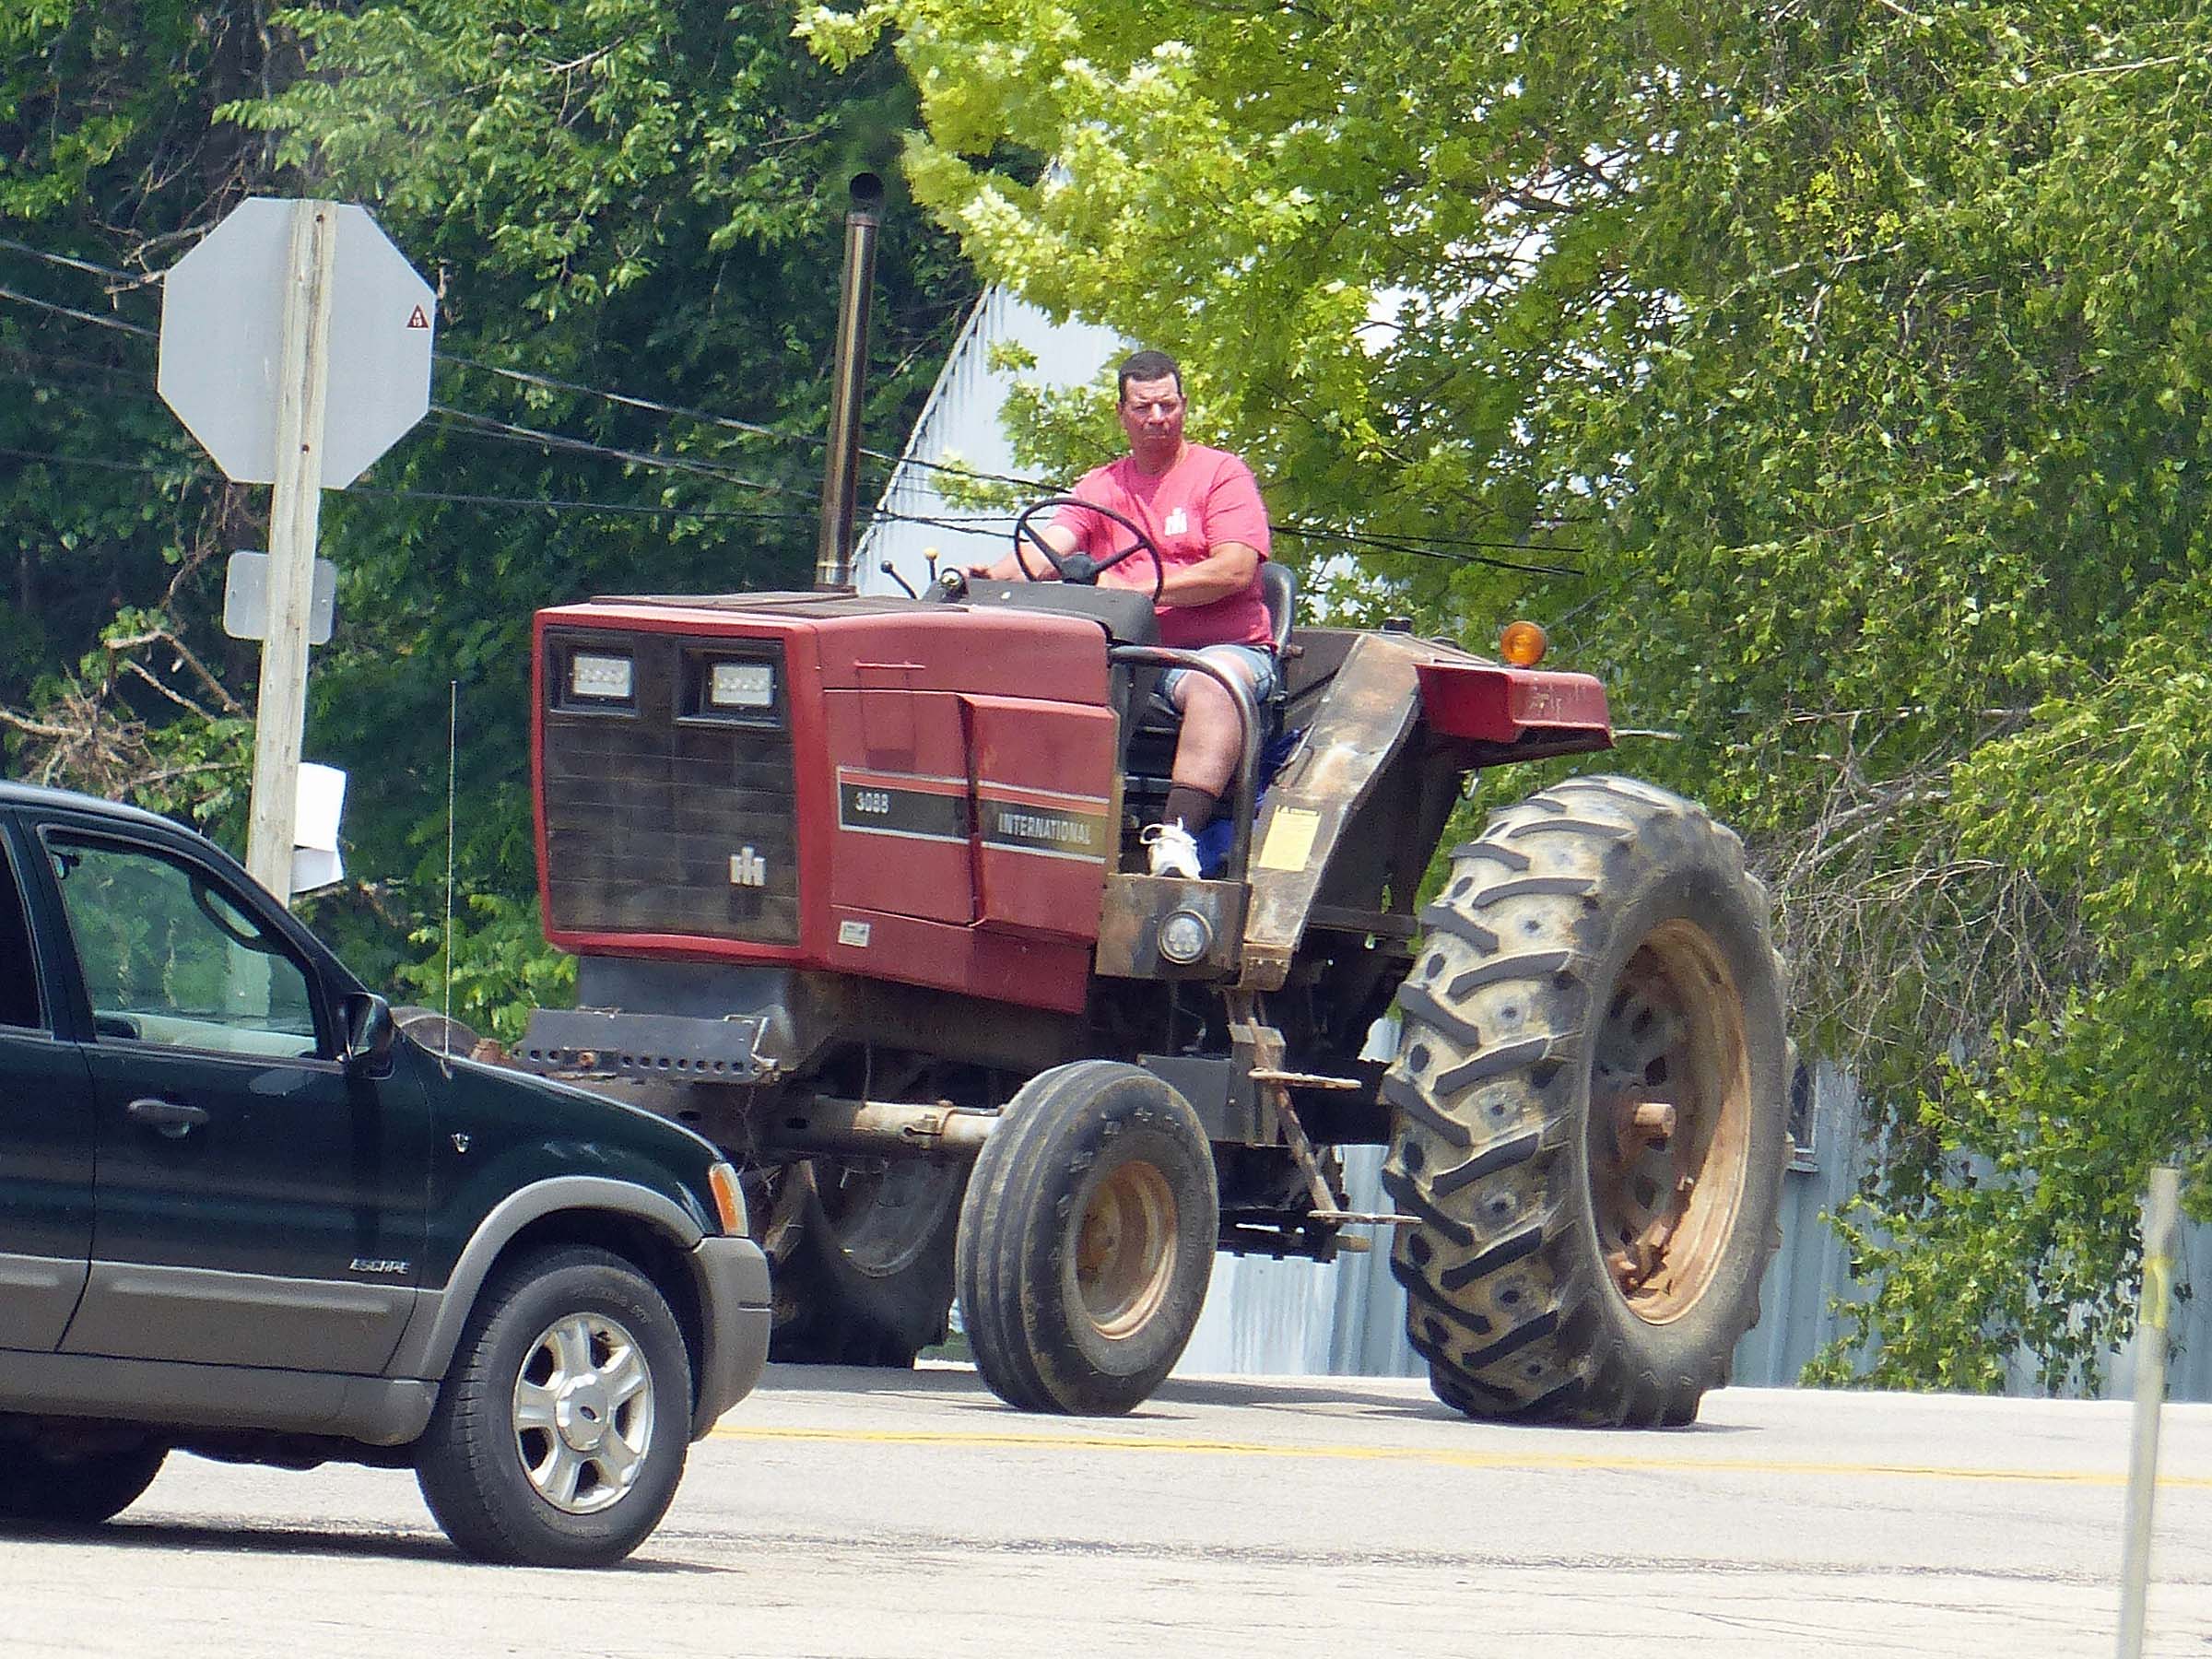 26 Jun Tractor Parade